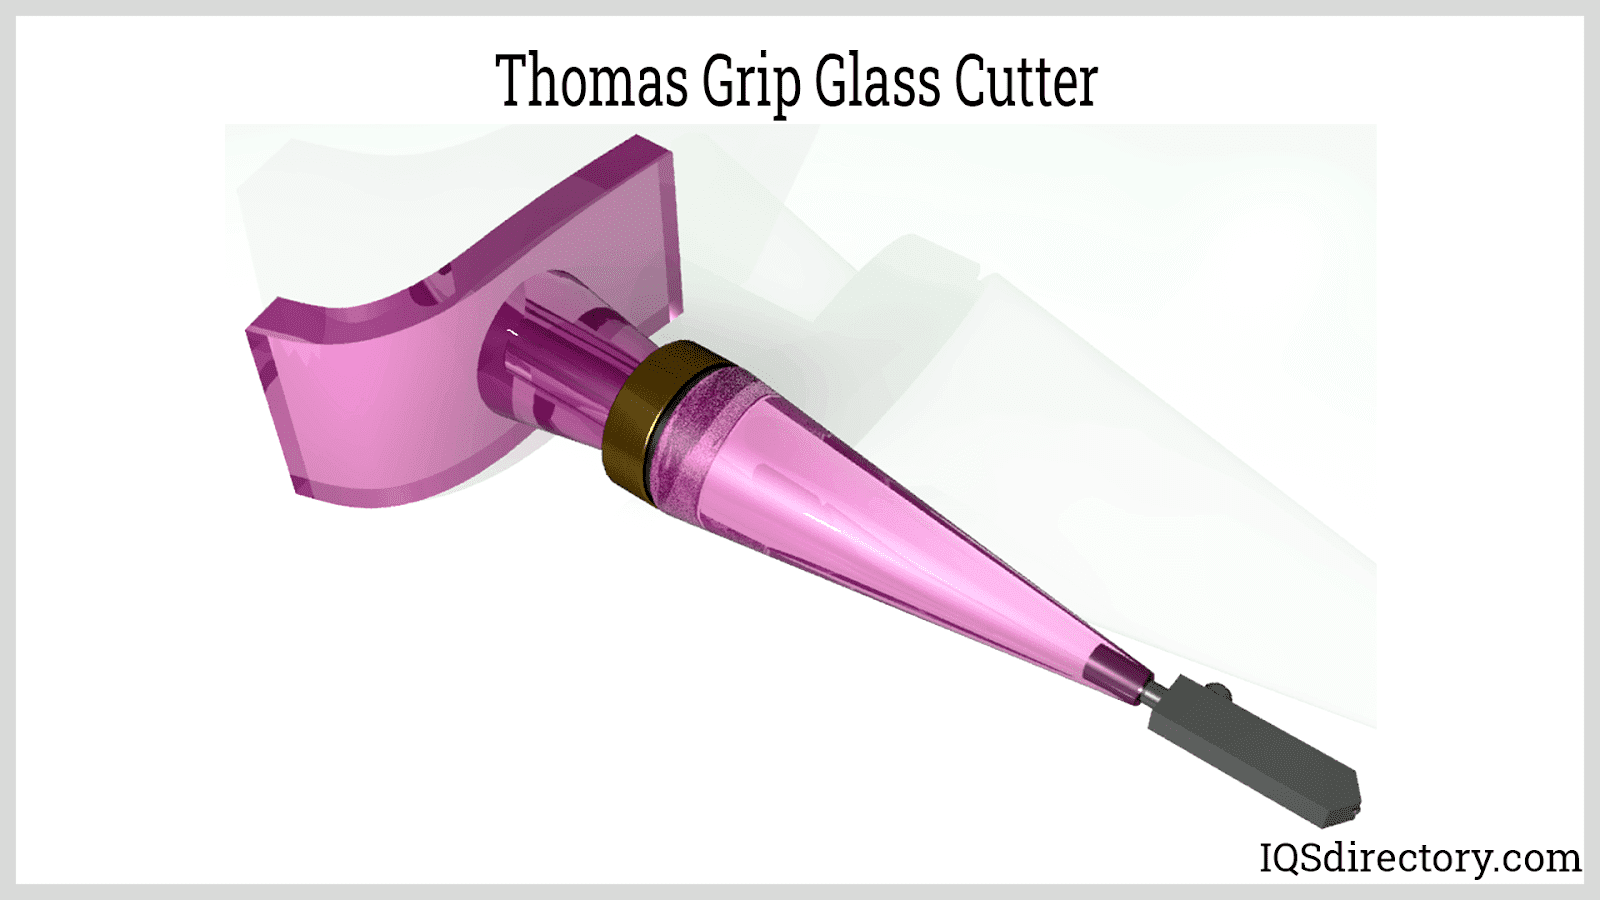 Thomas Grip Glass Cutter